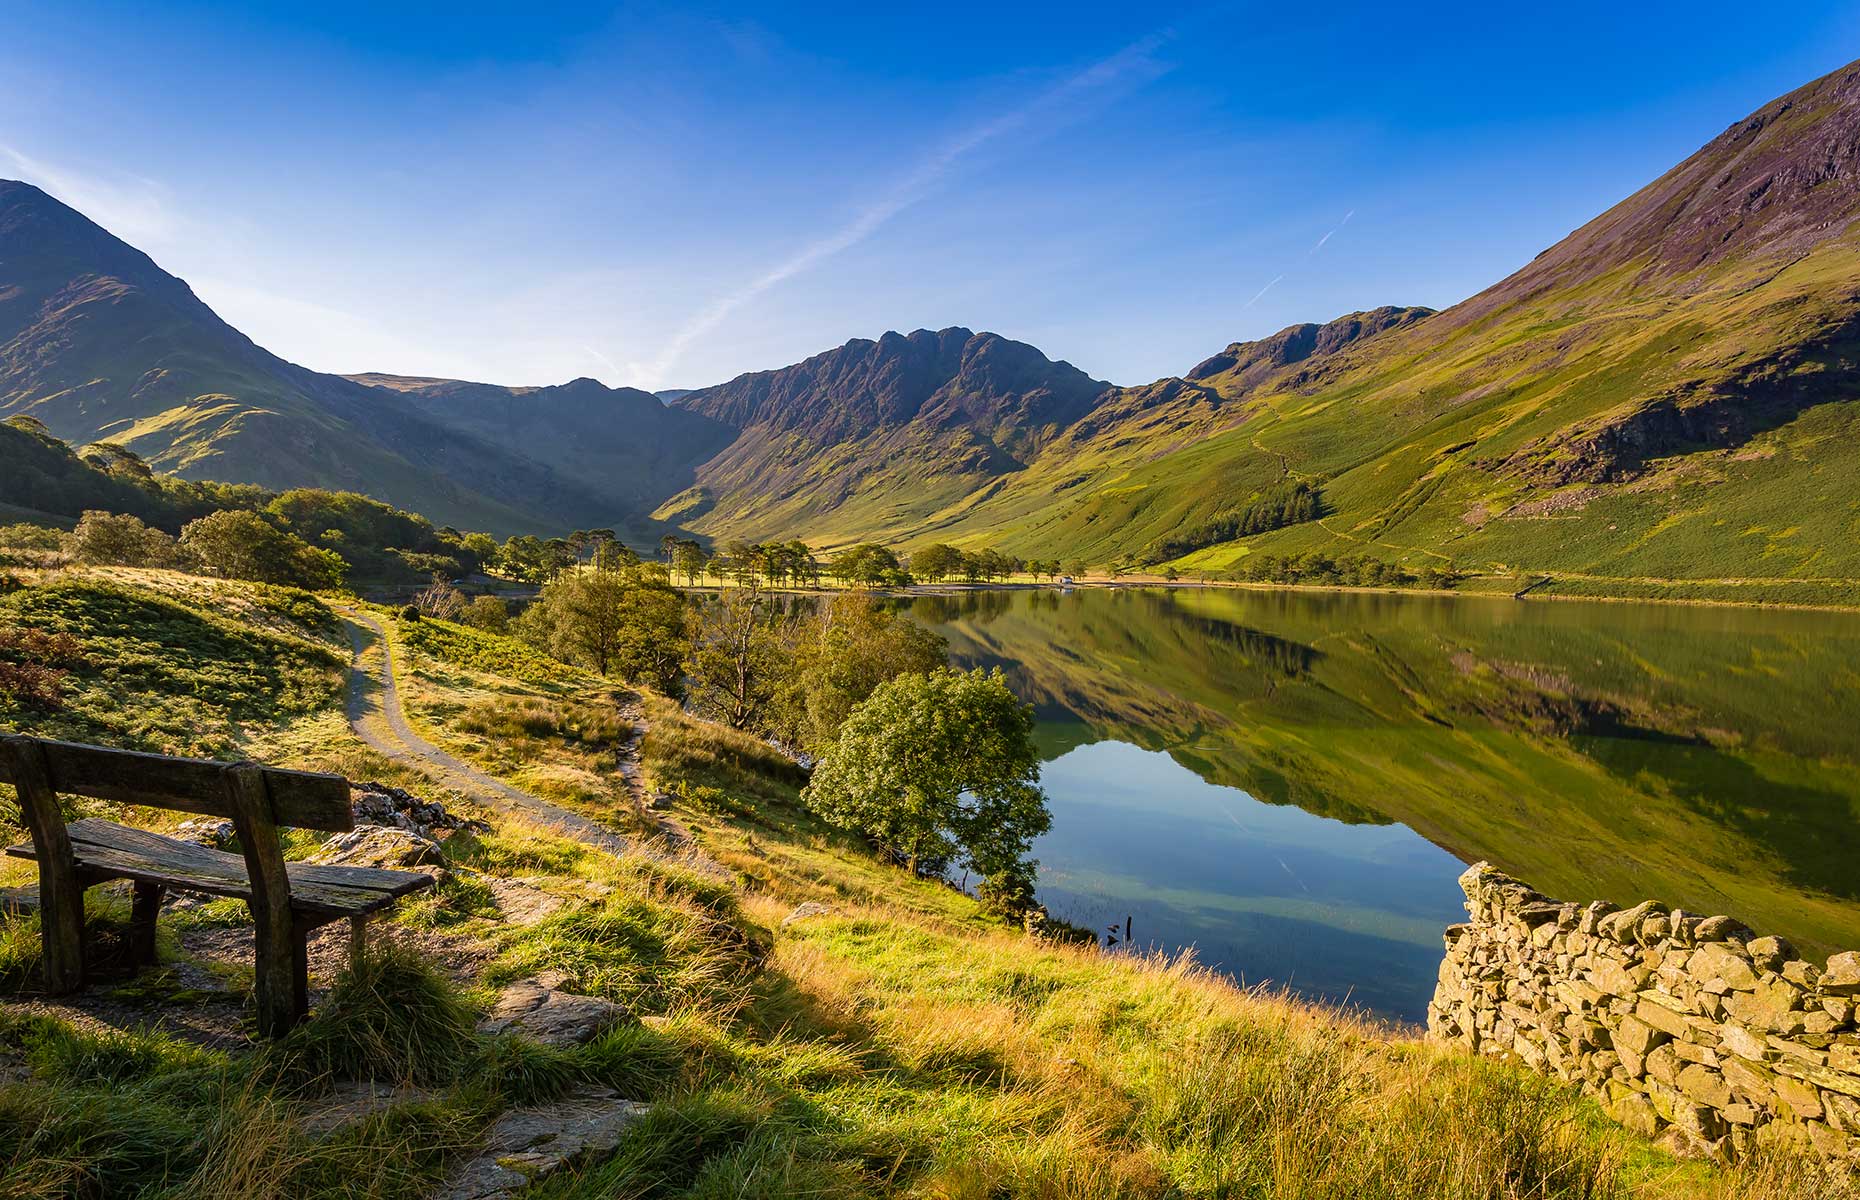 Buttermere in the Lake District (Image: Michael Conrad/Shutterstock) 